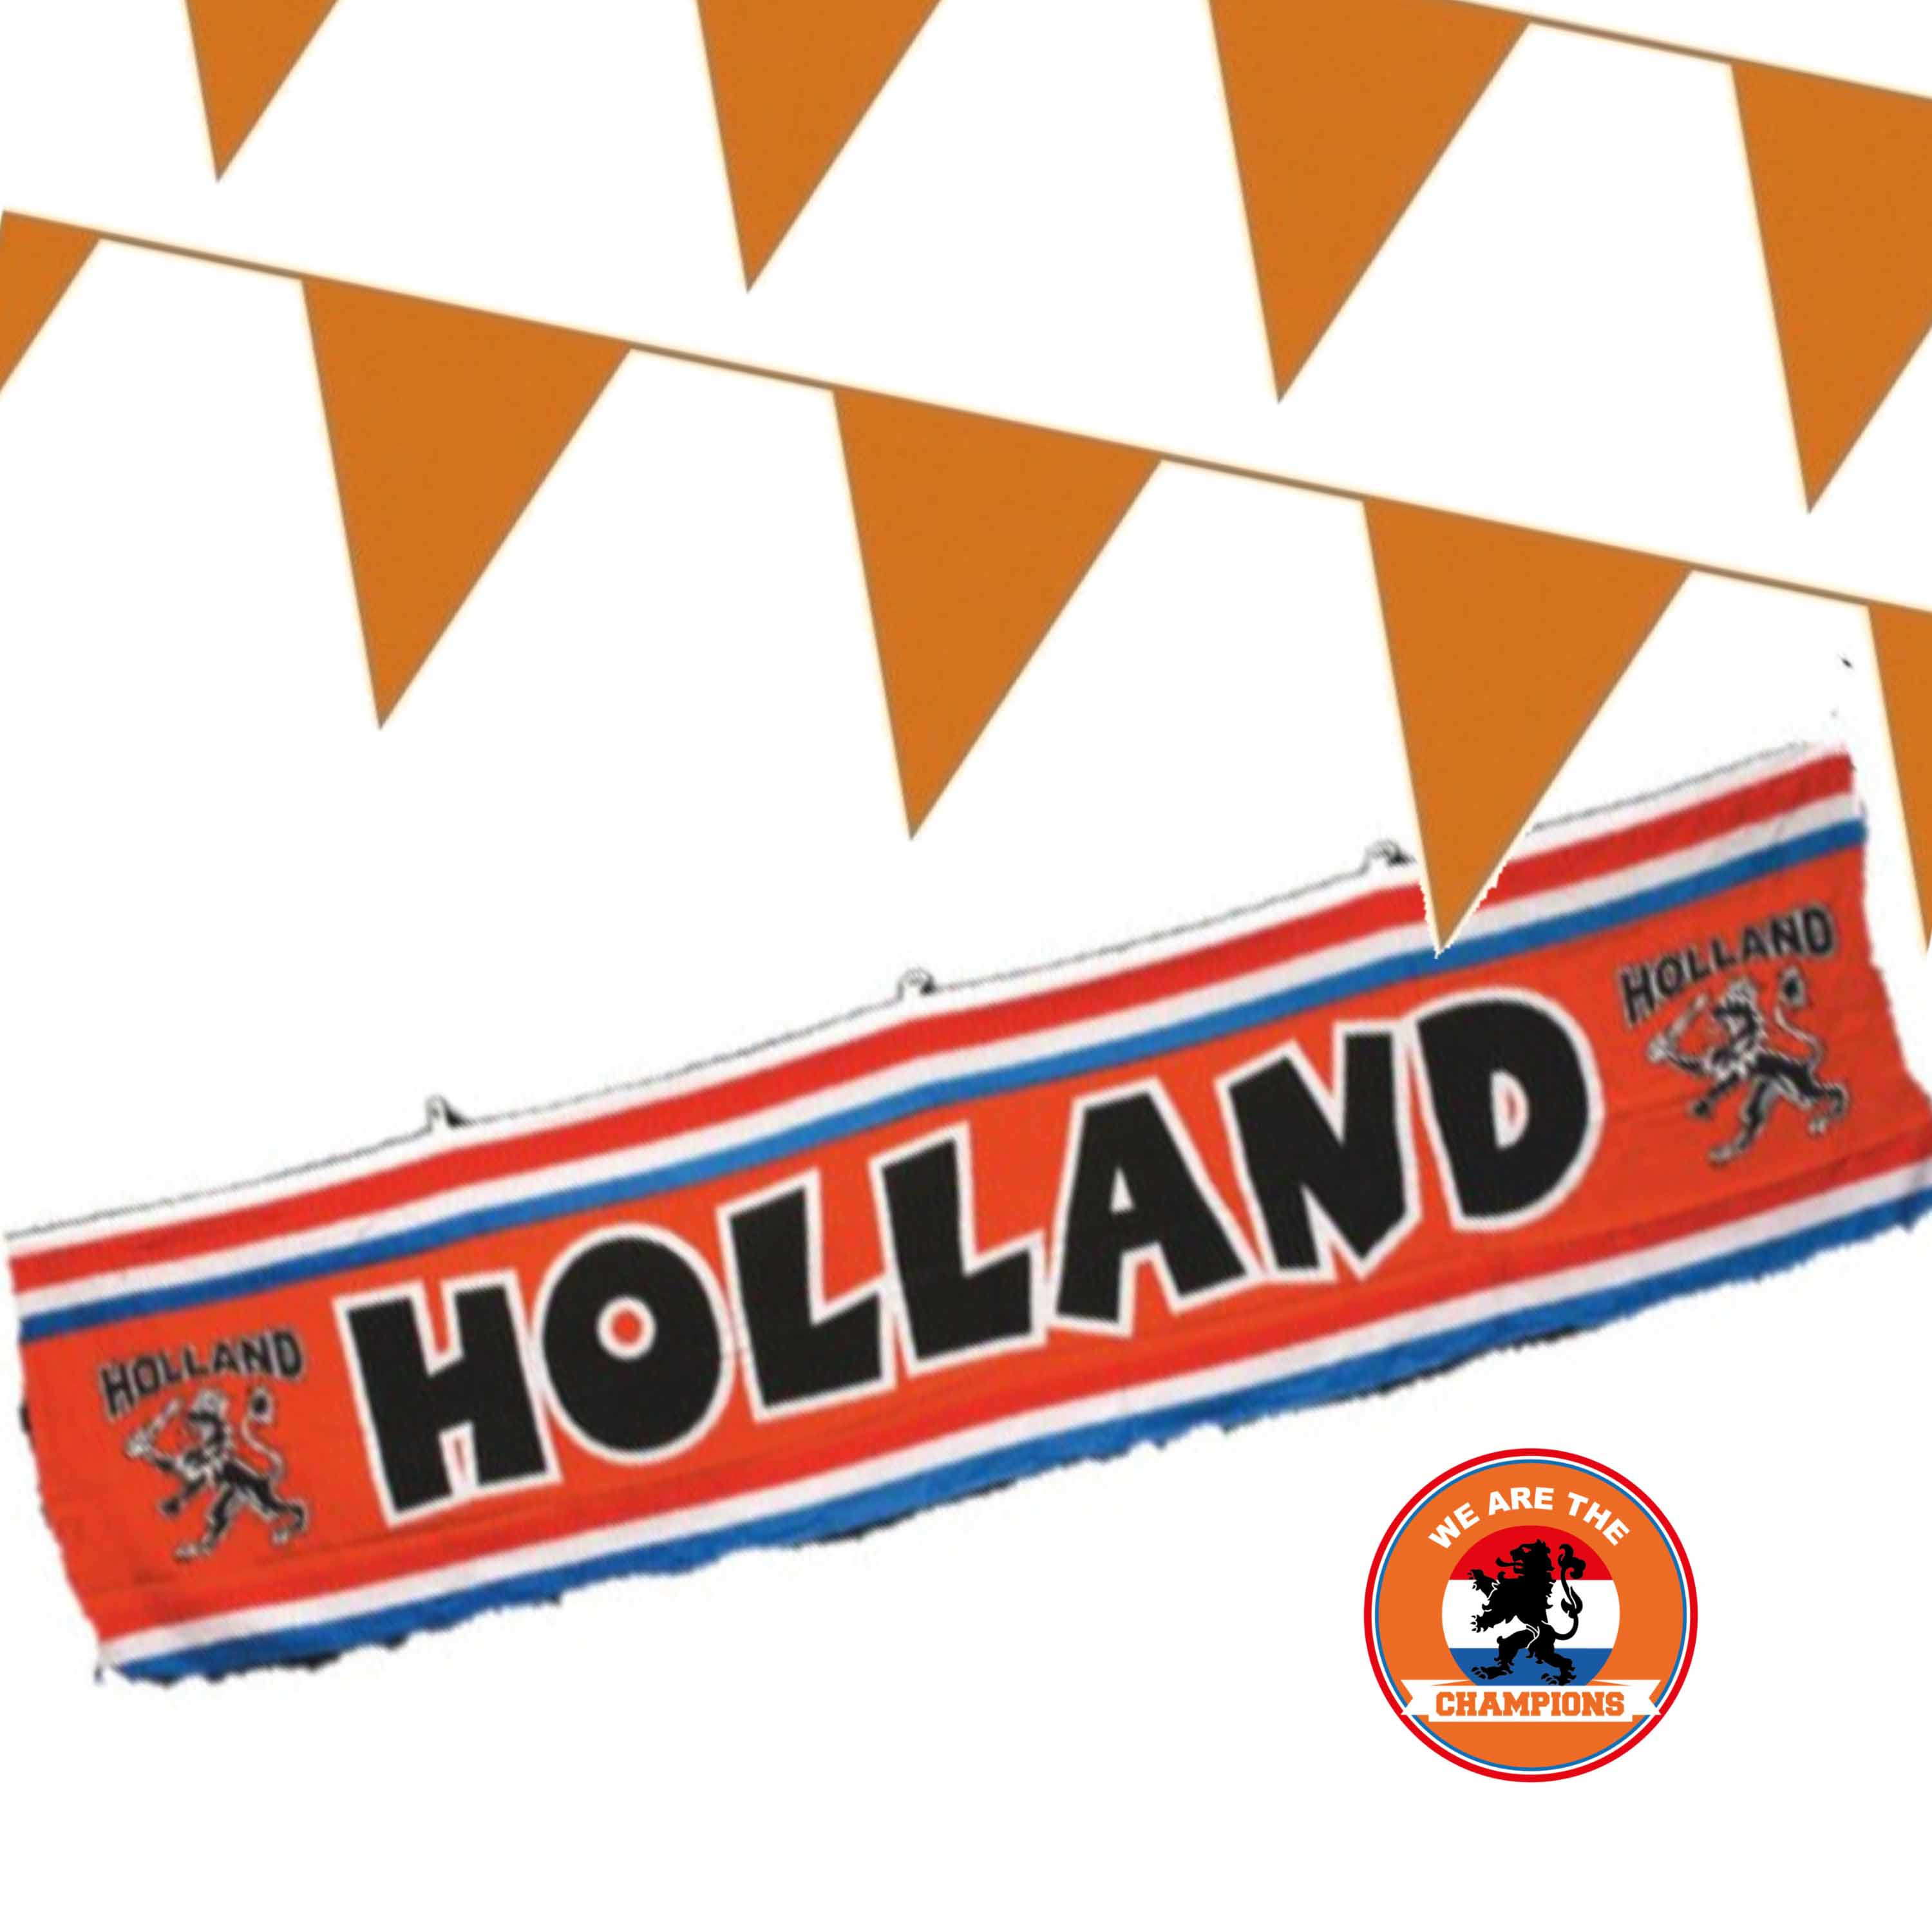 Ek oranje straat- huis versiering pakket met oa 1x Holland spandoek 70 x300 en 300 m vlaggenlijnen